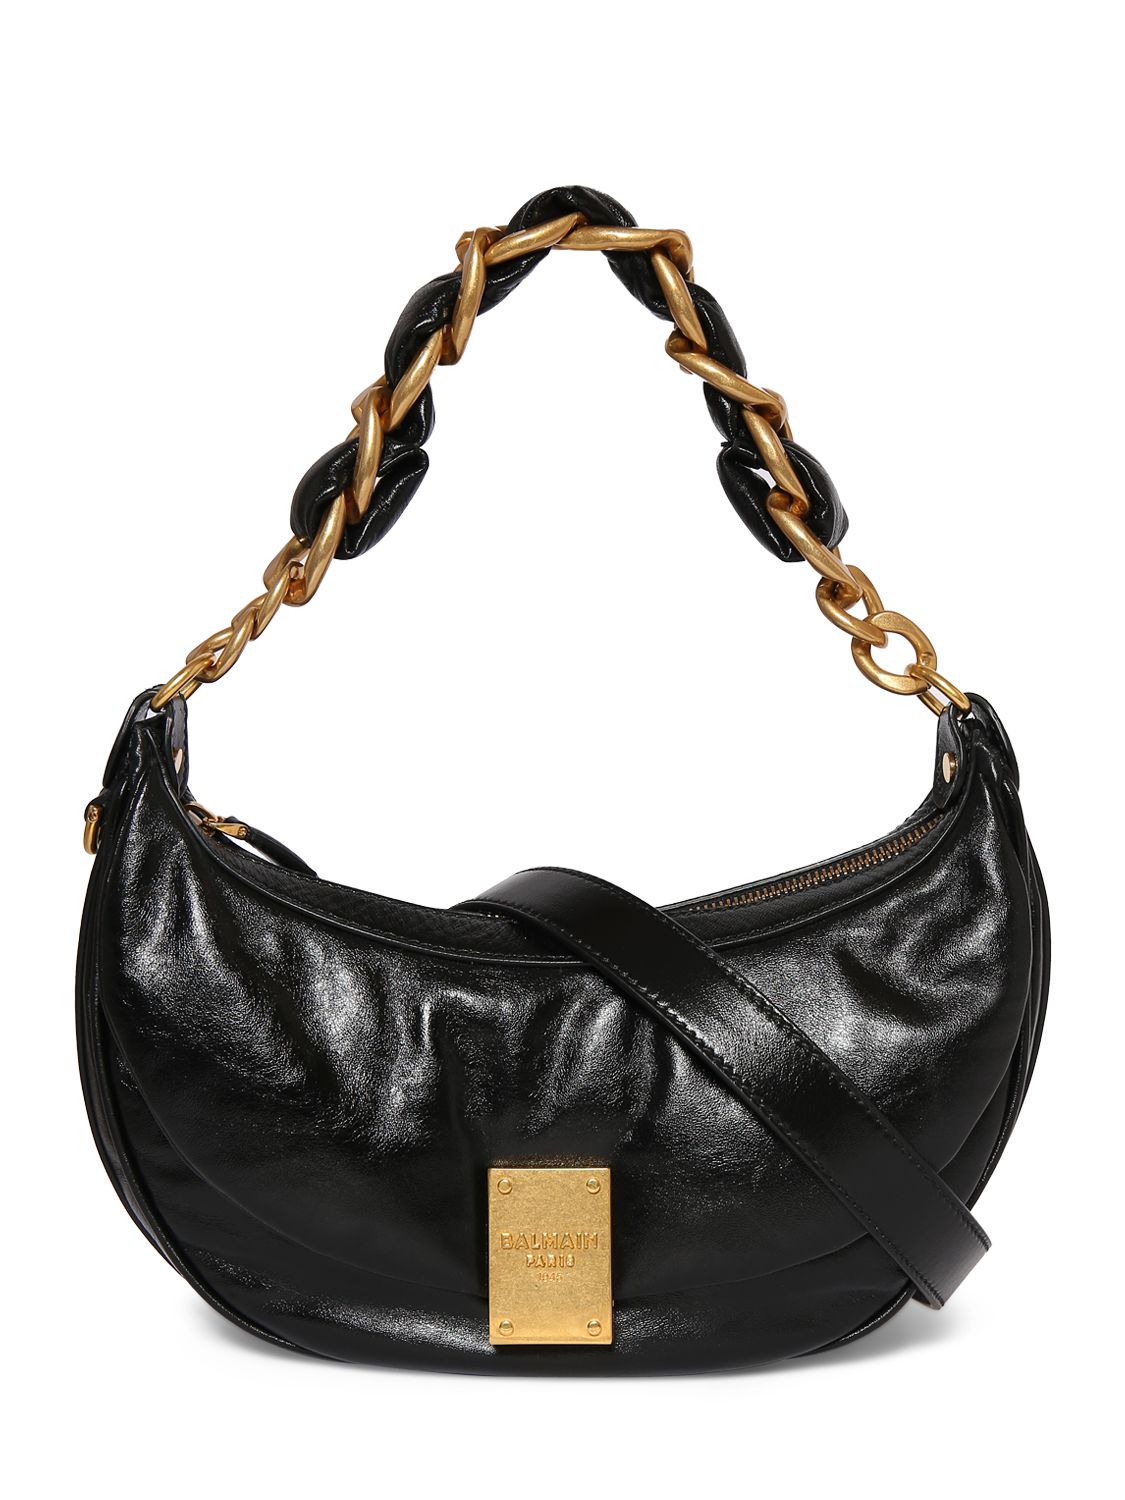 Balmain Black Glittered Shoulder Bag